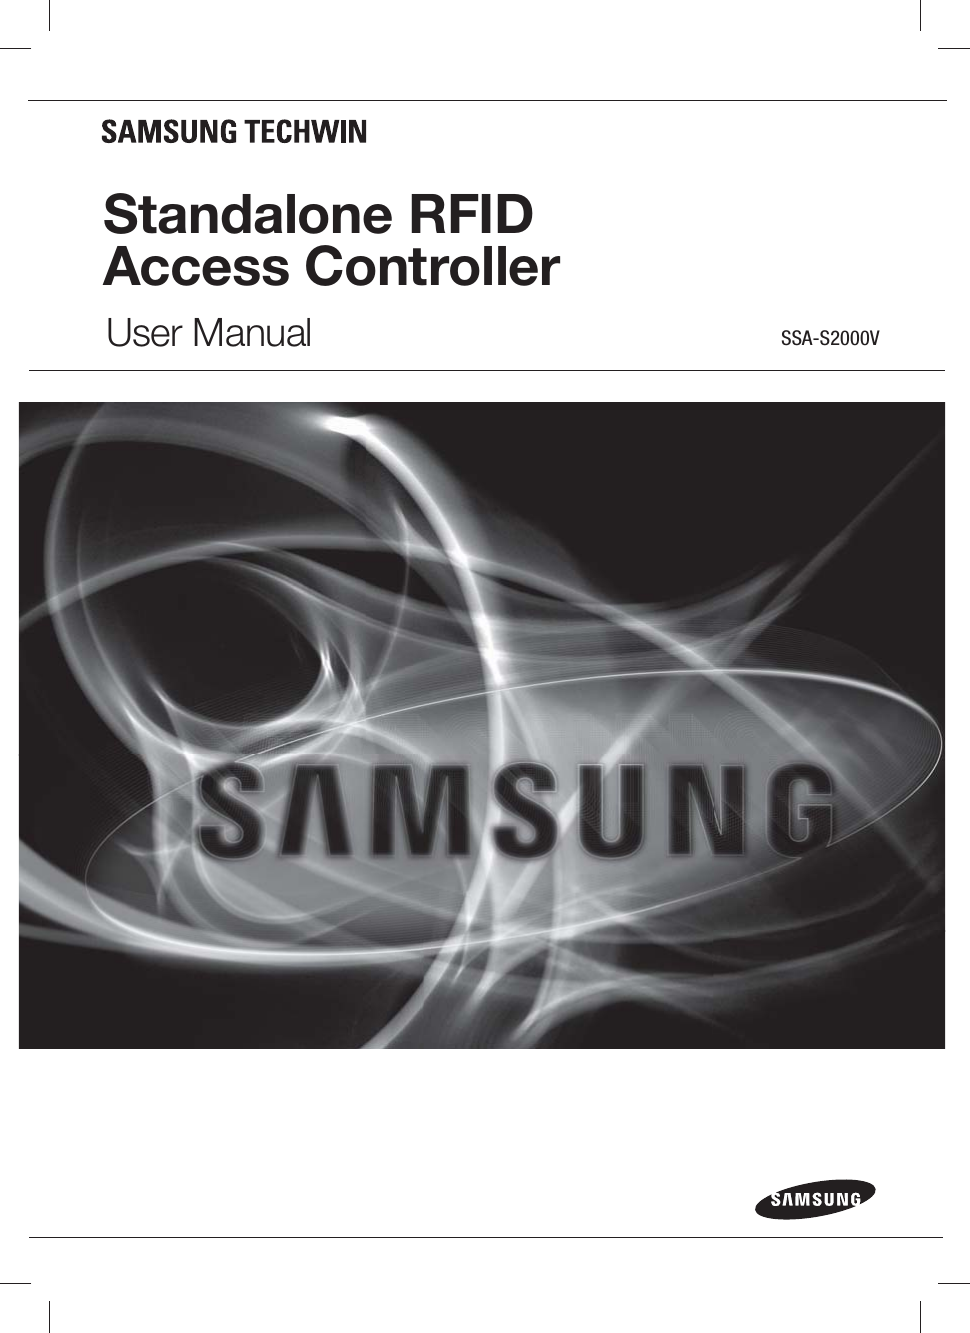 Standalone RFID Access ControllerUser Manual SSA-S2000V